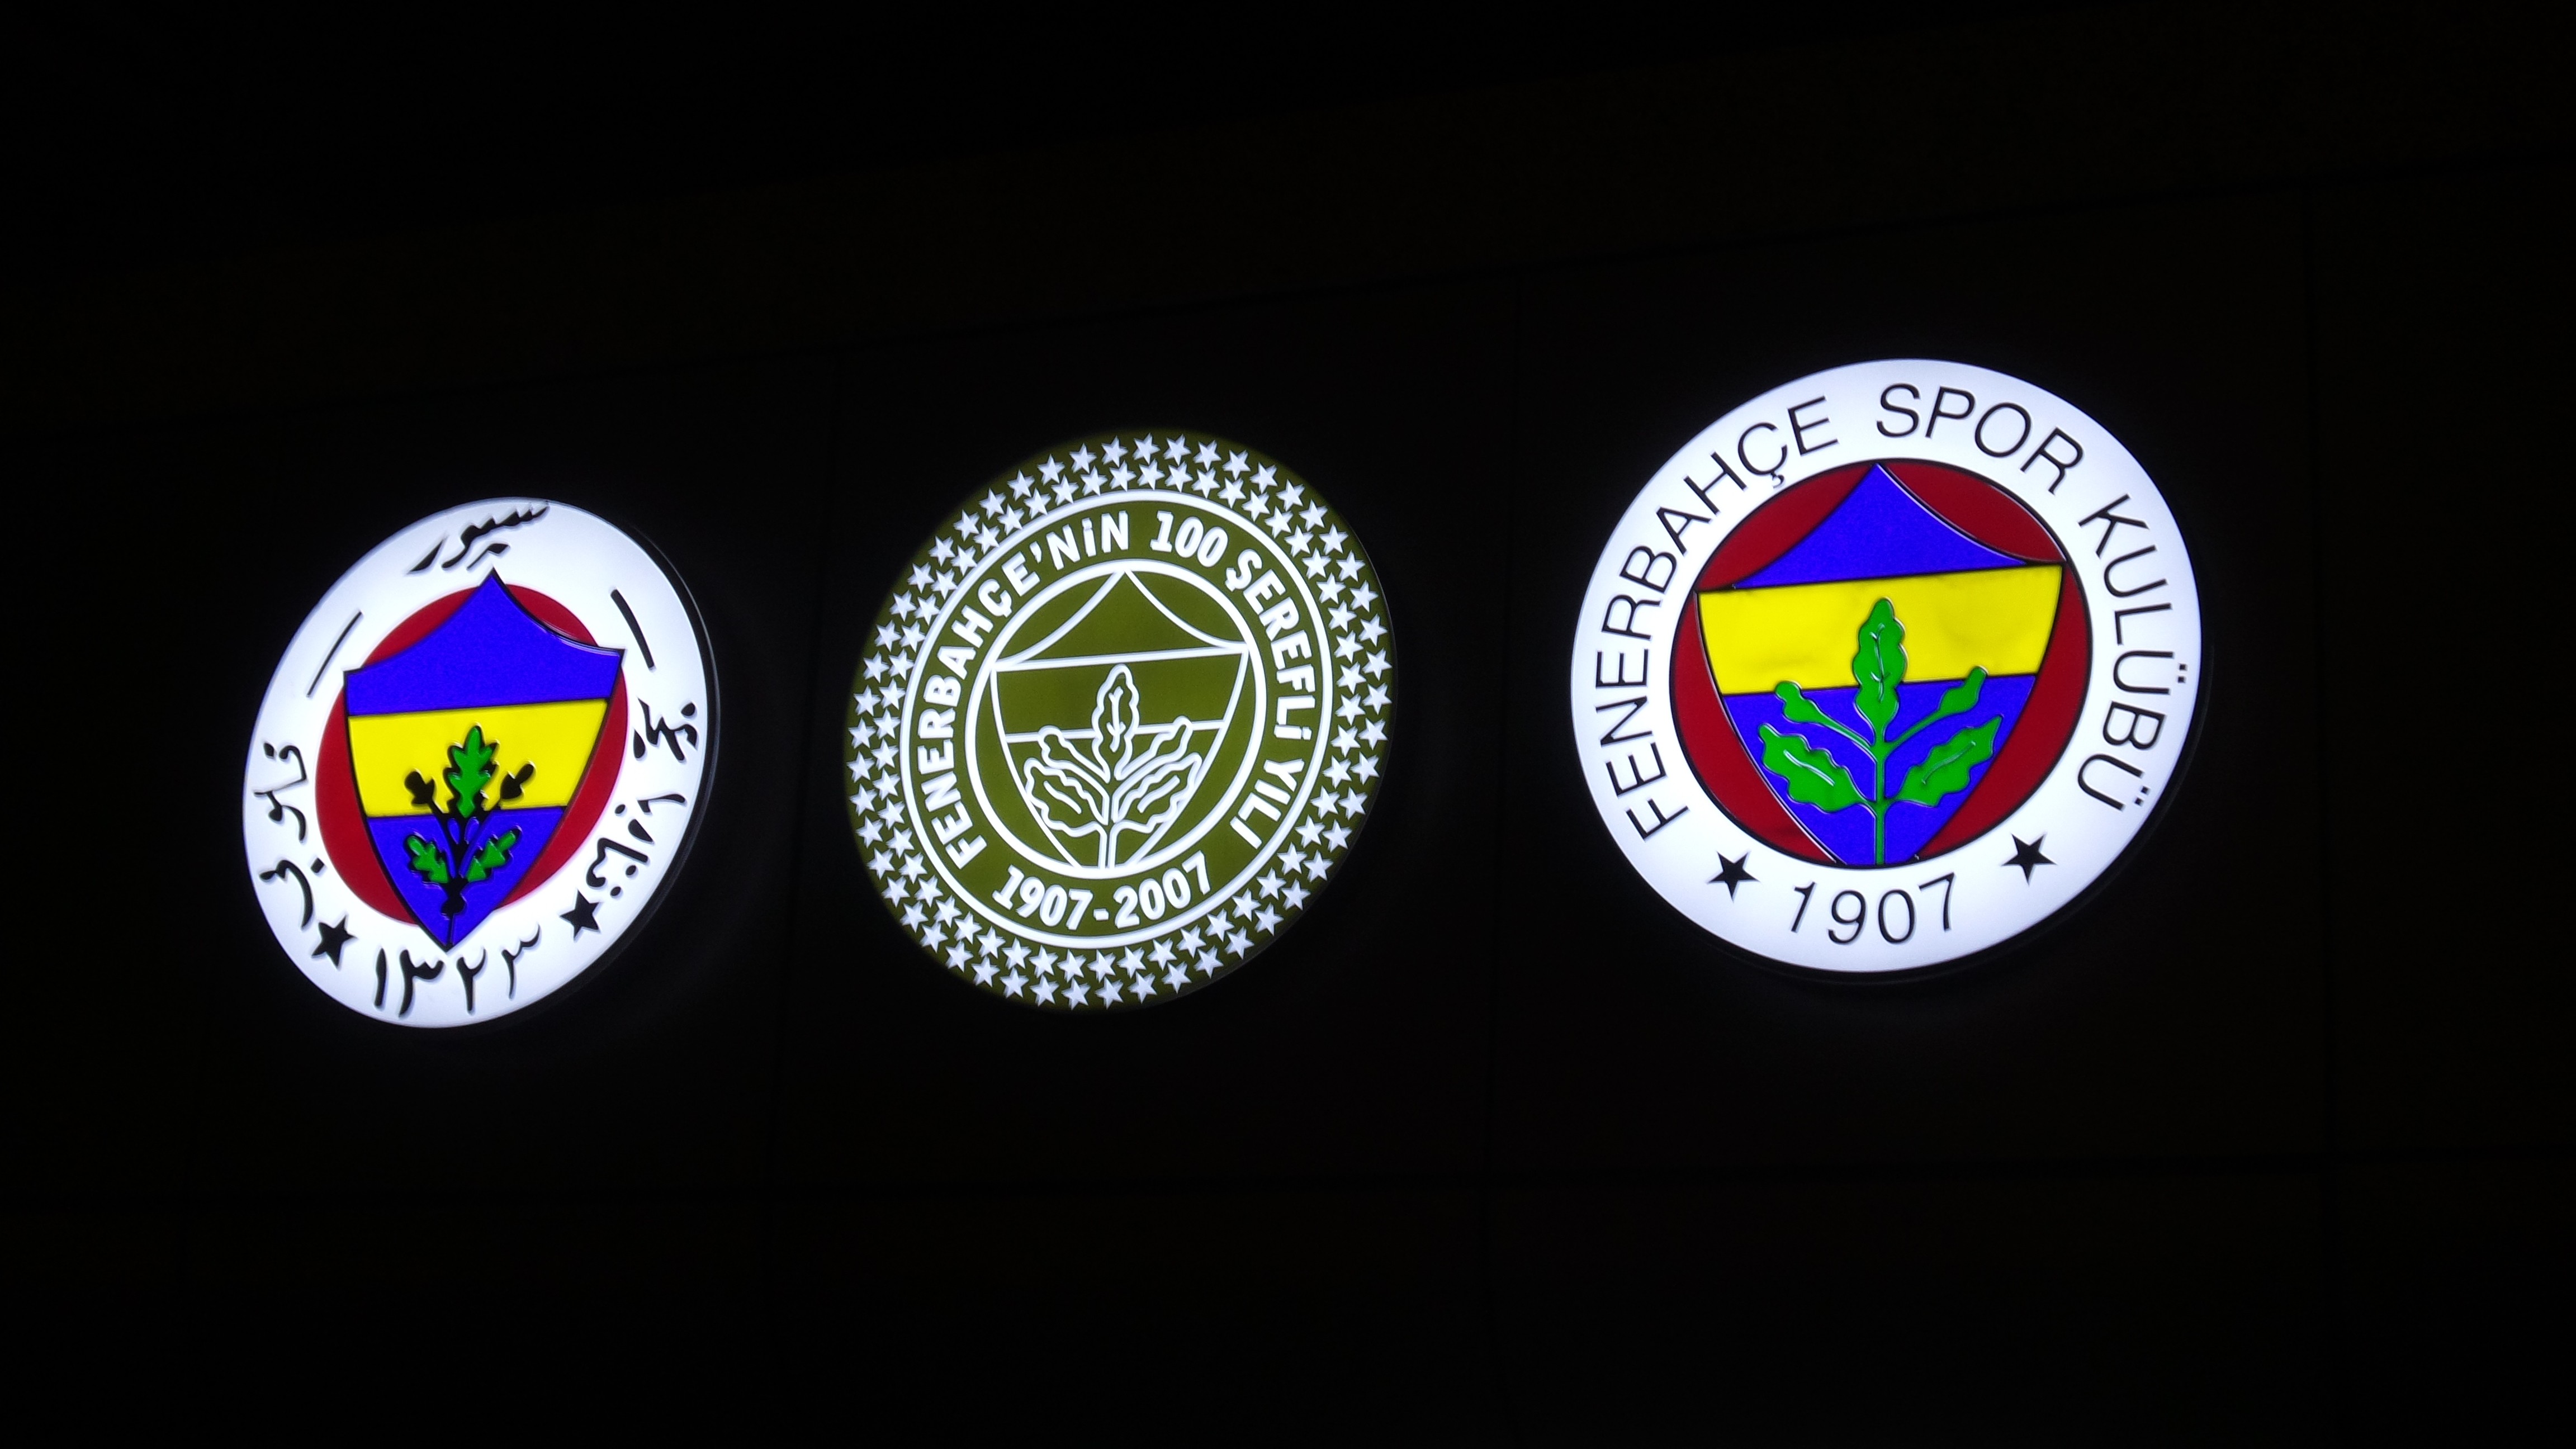 General 4608x2592 Fenerbahçe 1907 (Year) logo simple background black background sport soccer soccer clubs